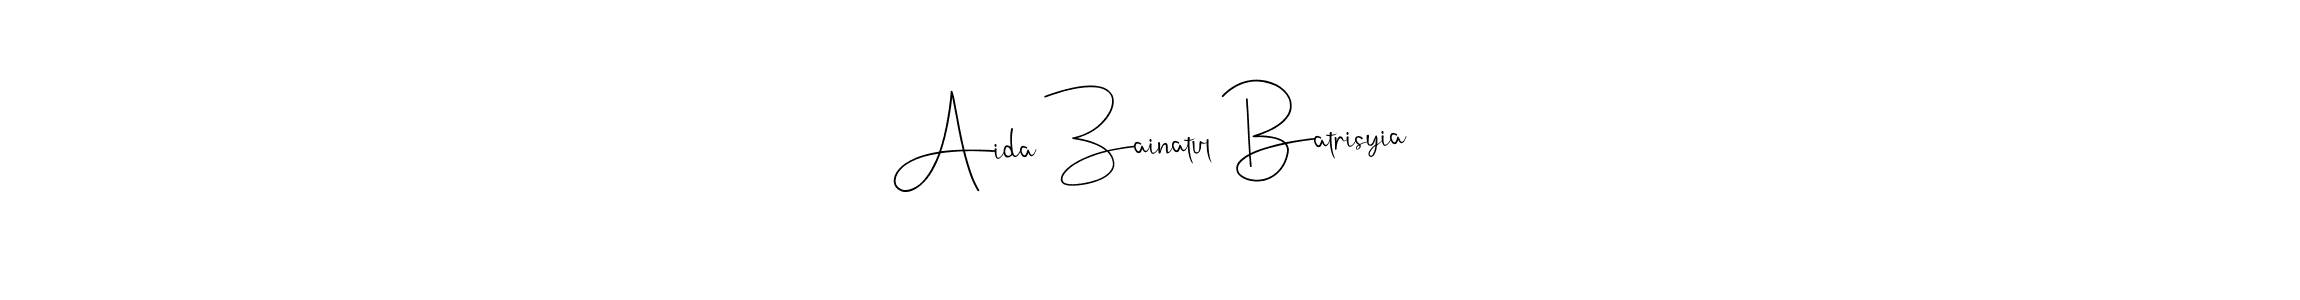 How to Draw Aida Zainatul Batrisyia signature style? Andilay-7BmLP is a latest design signature styles for name Aida Zainatul Batrisyia. Aida Zainatul Batrisyia signature style 4 images and pictures png